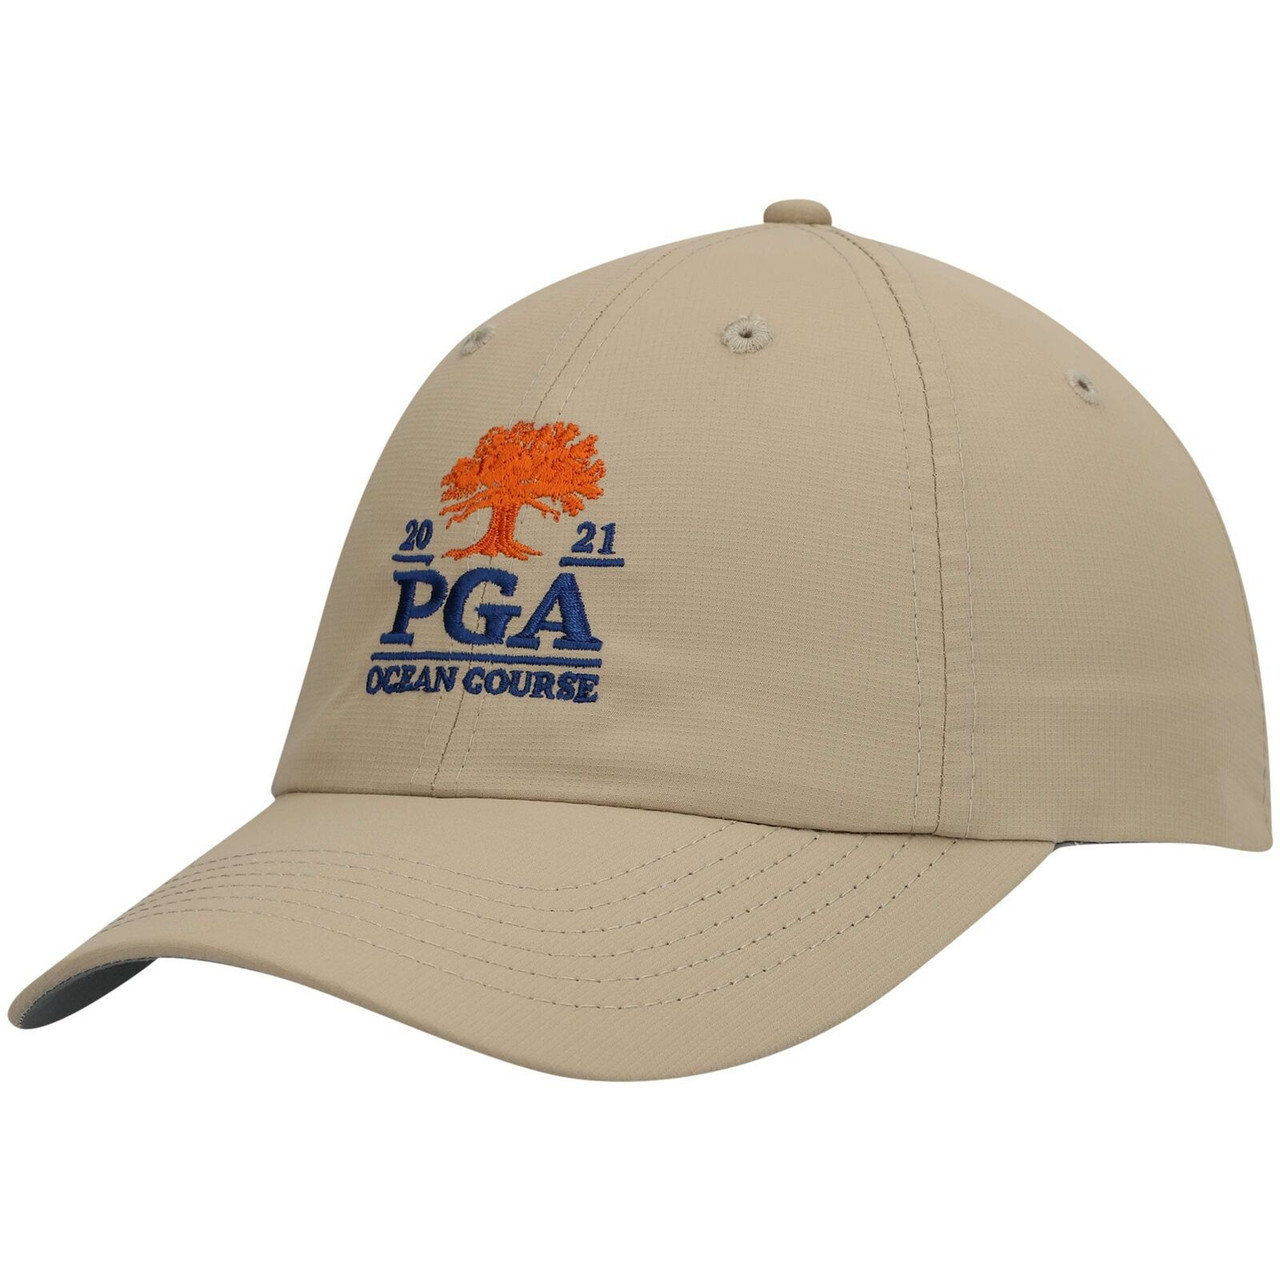 PGA Championship 2021 hat